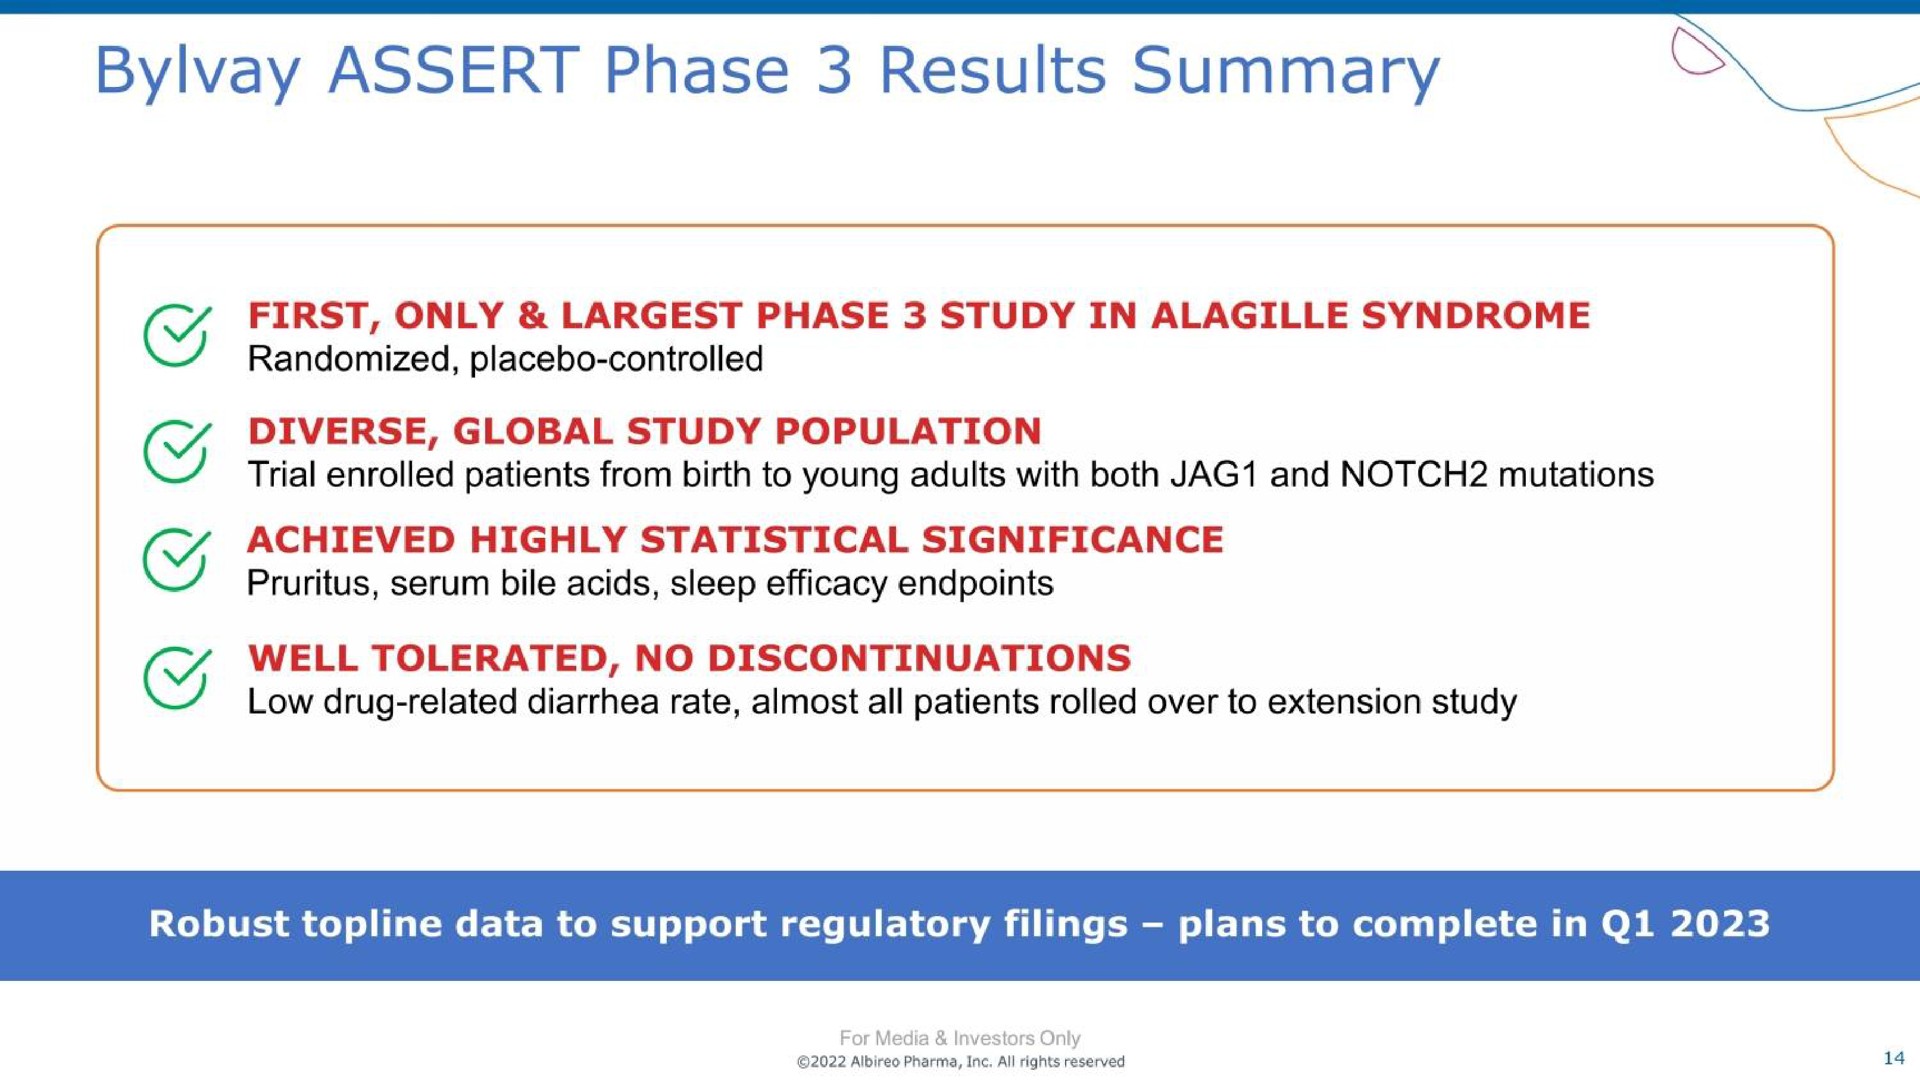 assert phase results summary | Albireo Pharma